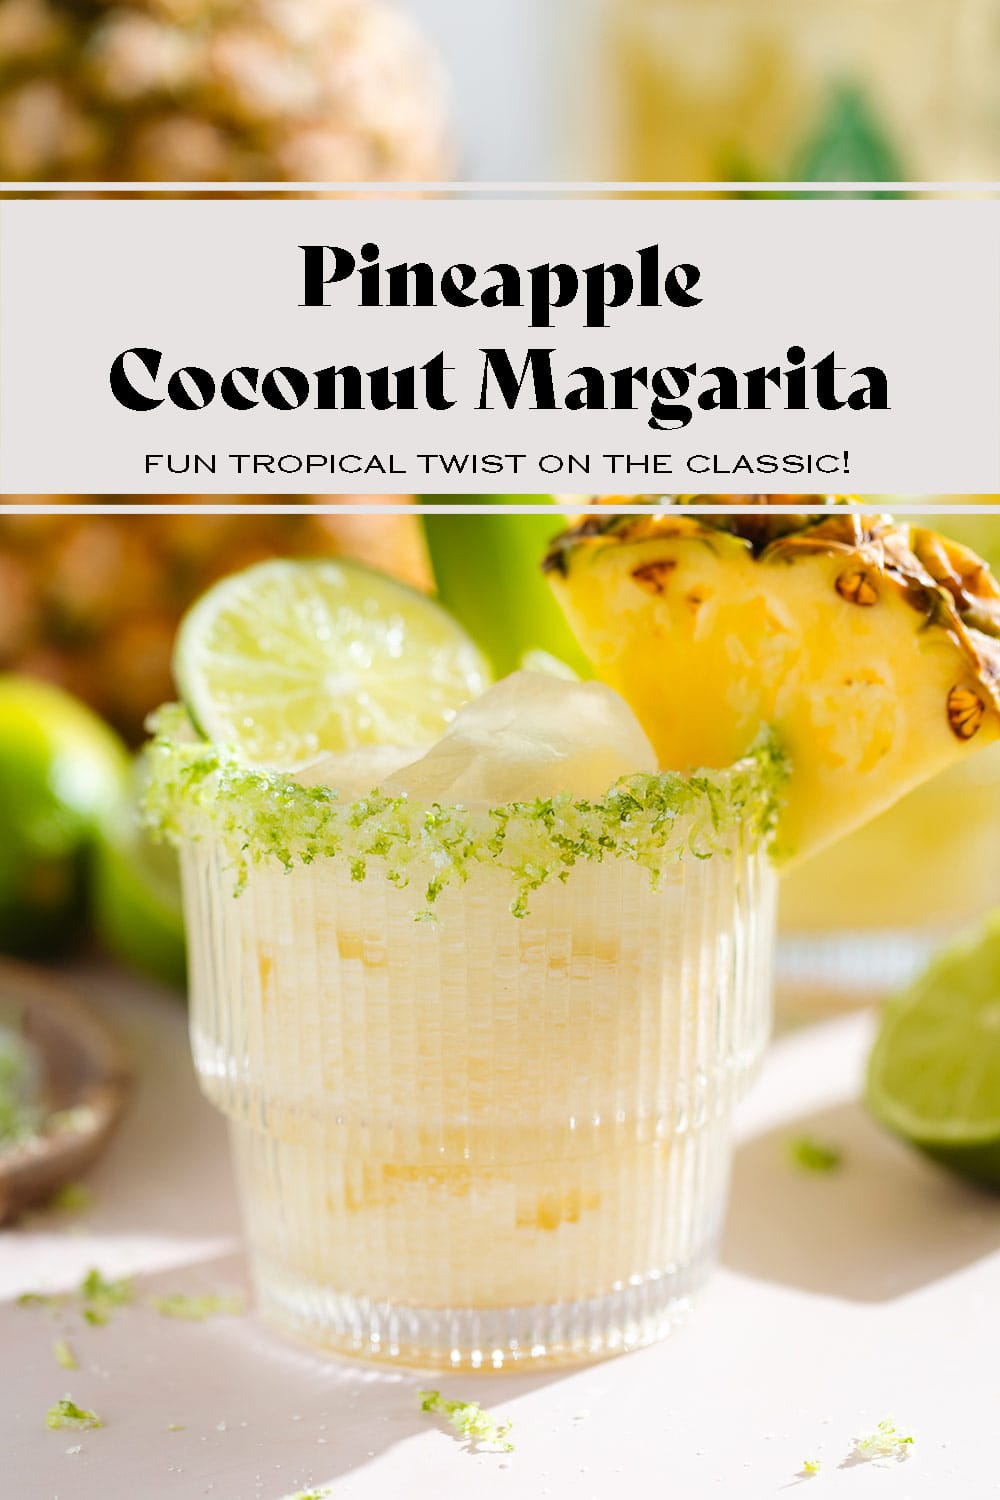 Pineapple Coconut Margarita